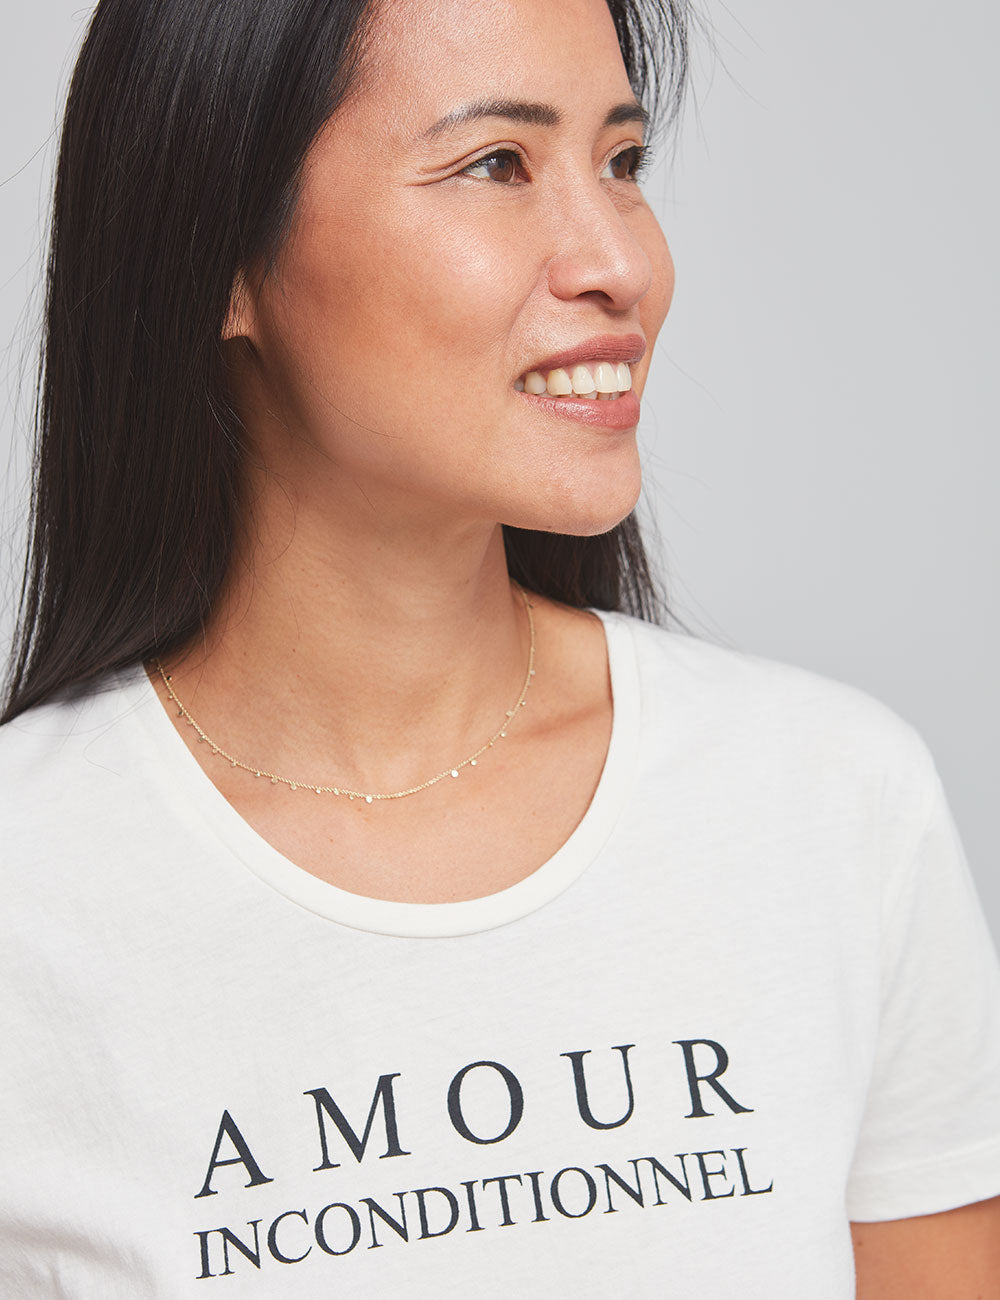 Camiseta Xuan Lan Amour Inconditionnel